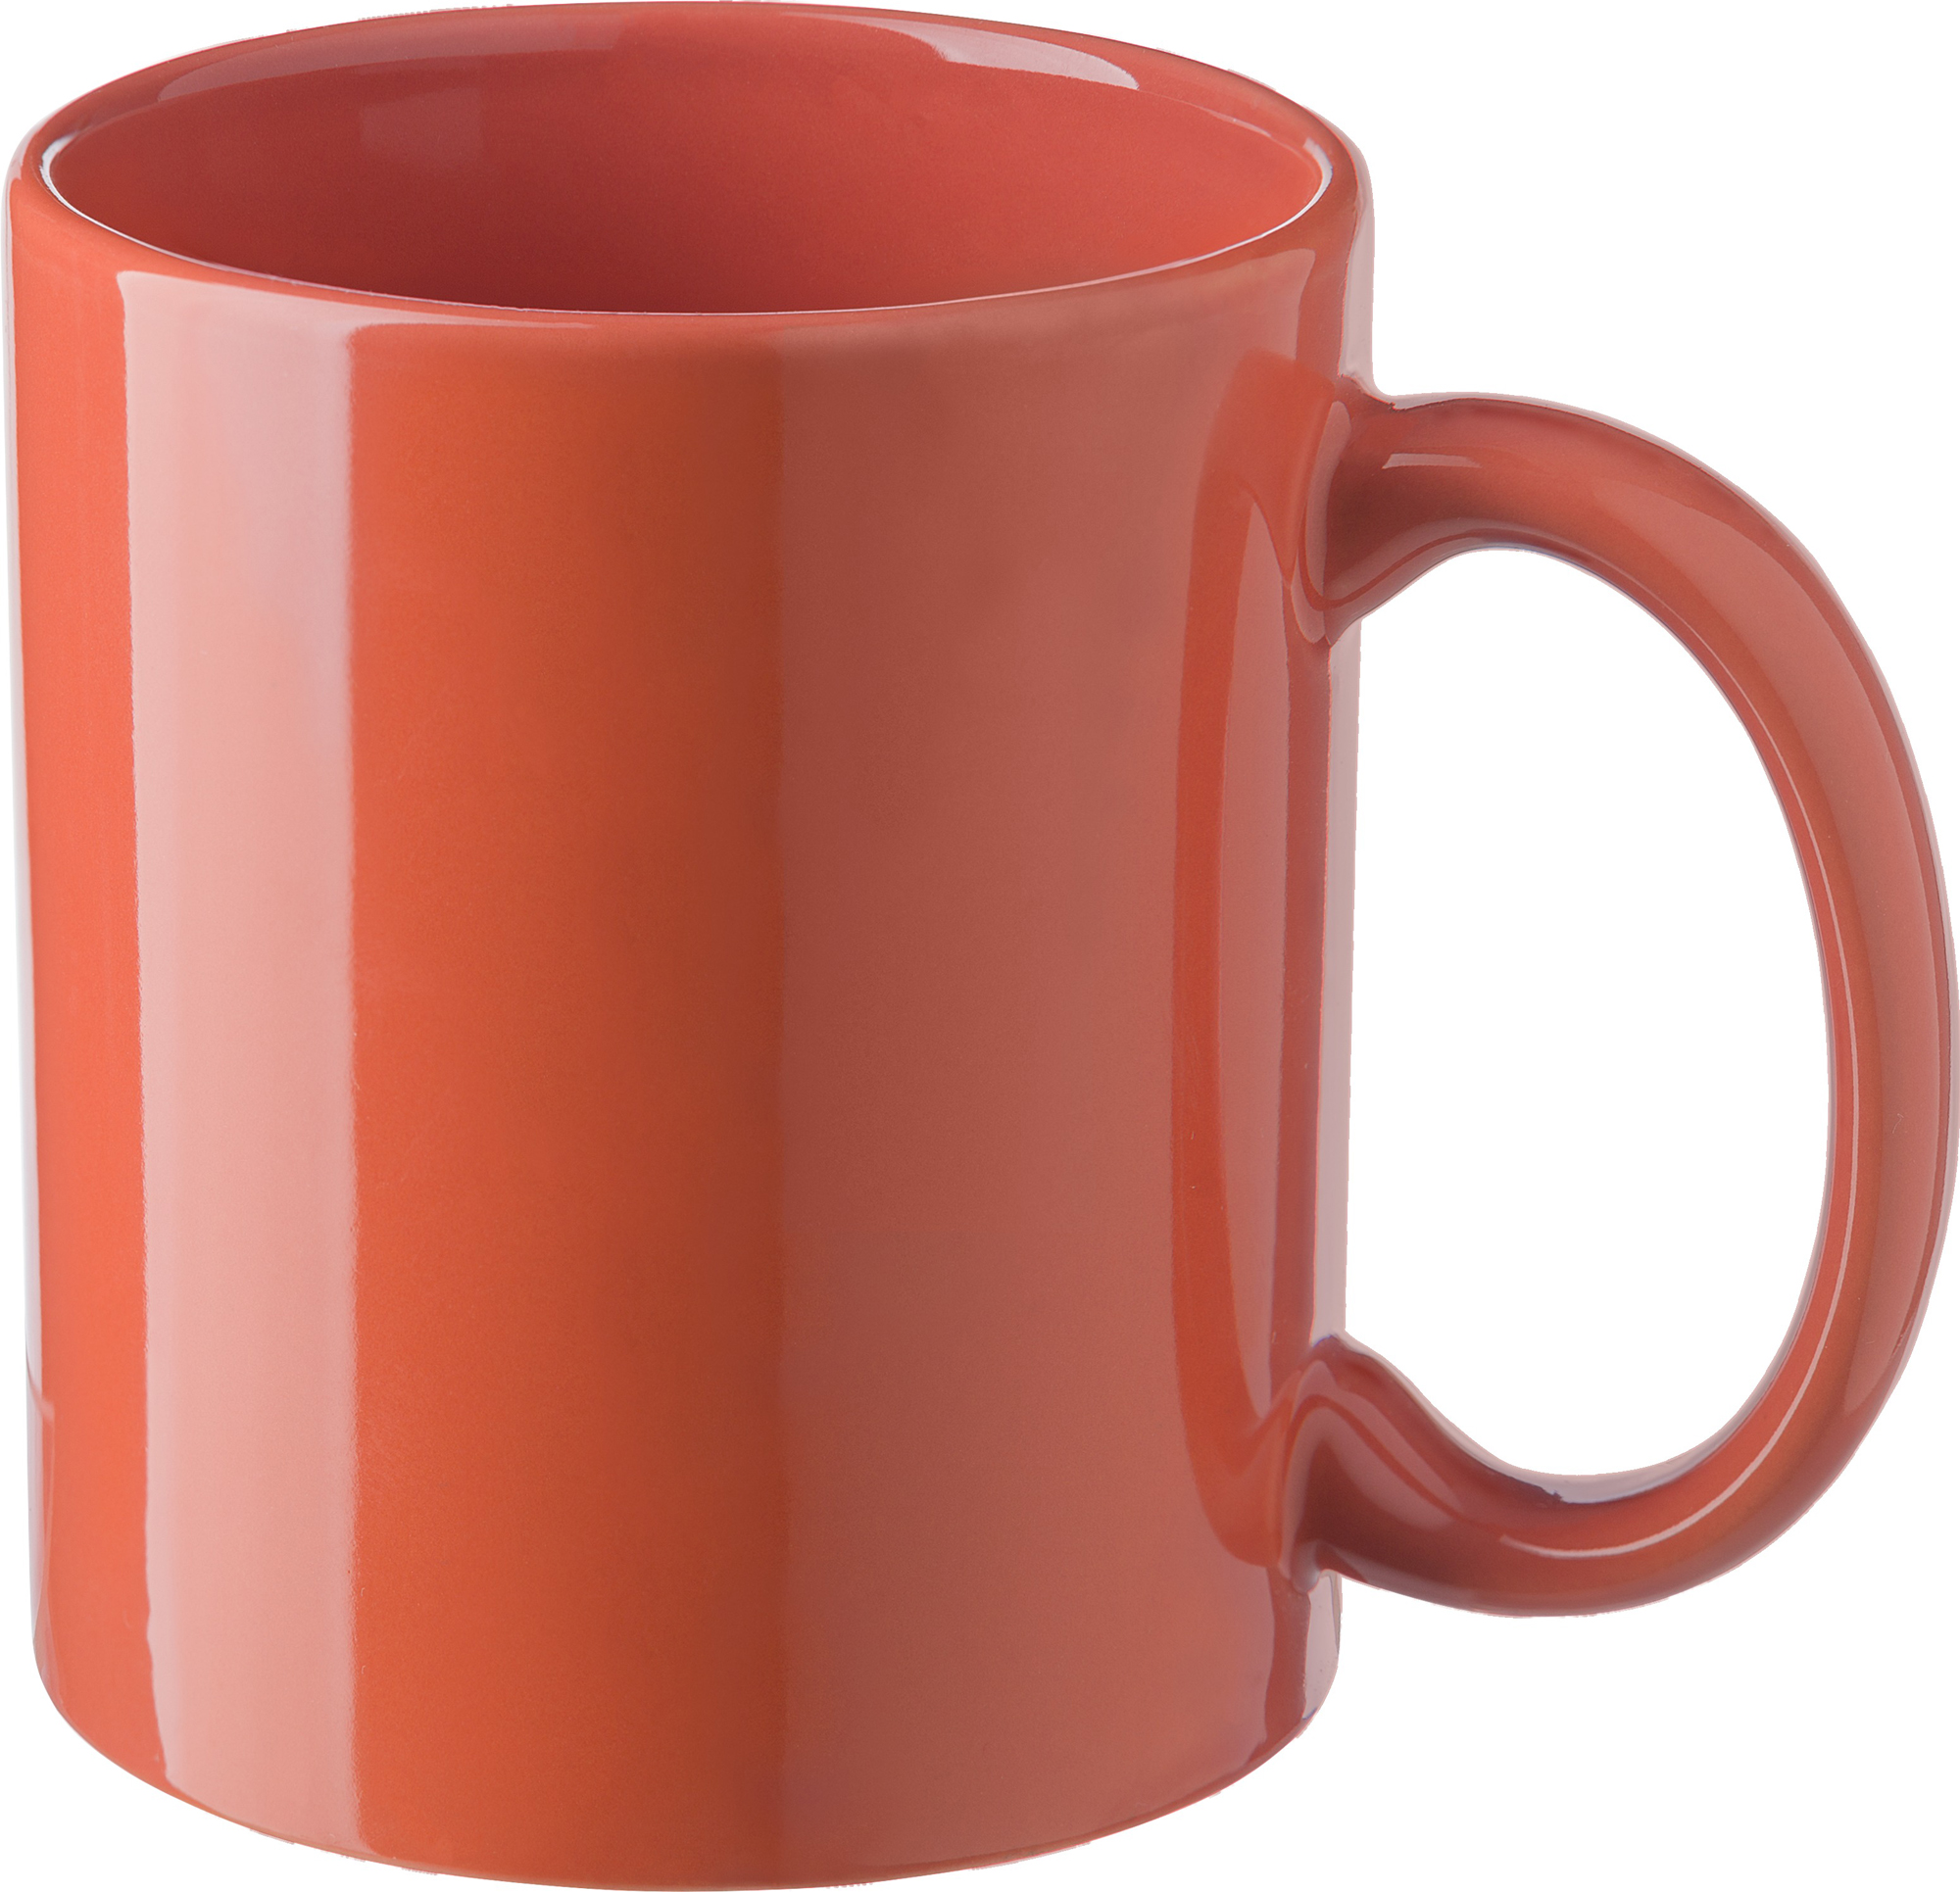 000000864650 007999999 3d045 rgt pro01 2022 fal - Ceramic mug (300ml)